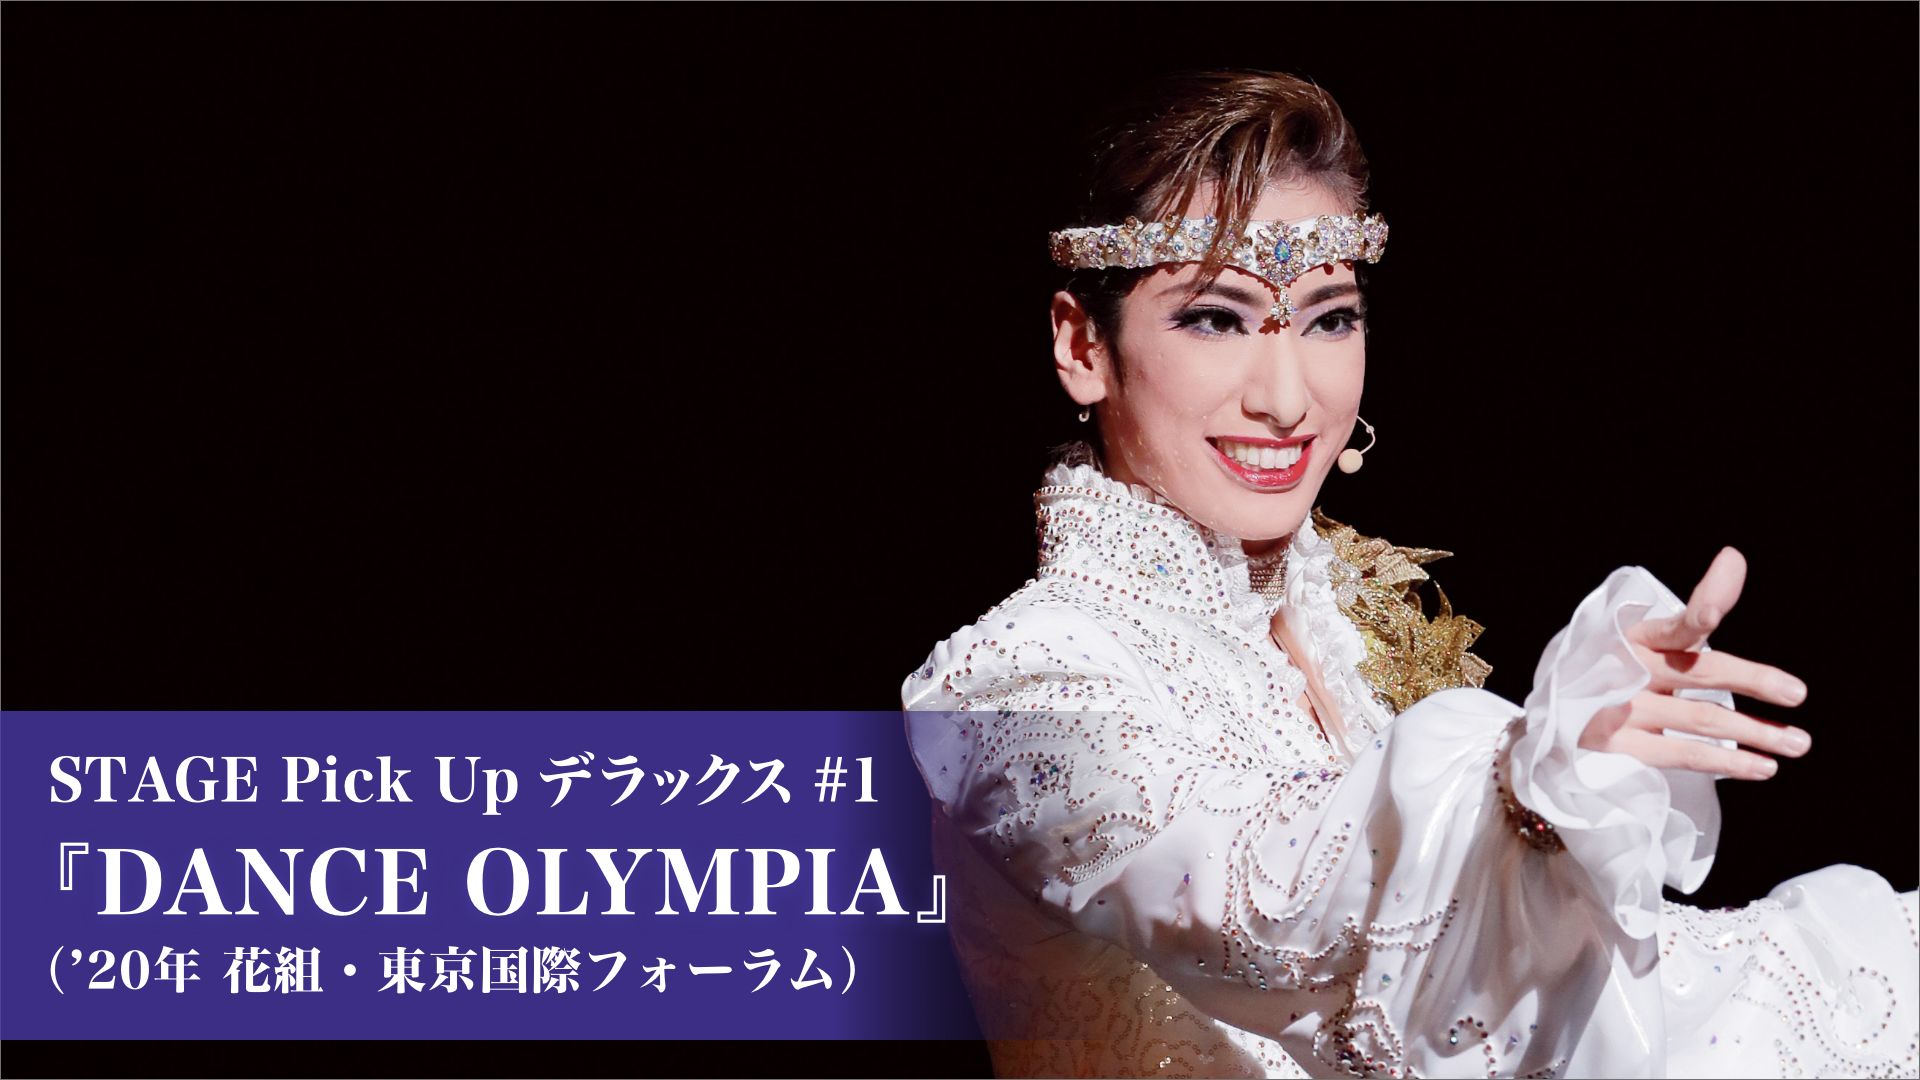 STAGE Pick Up デラックス #1『DANCE OLYMPIA』(’20年花組・東京国際フォーラム)